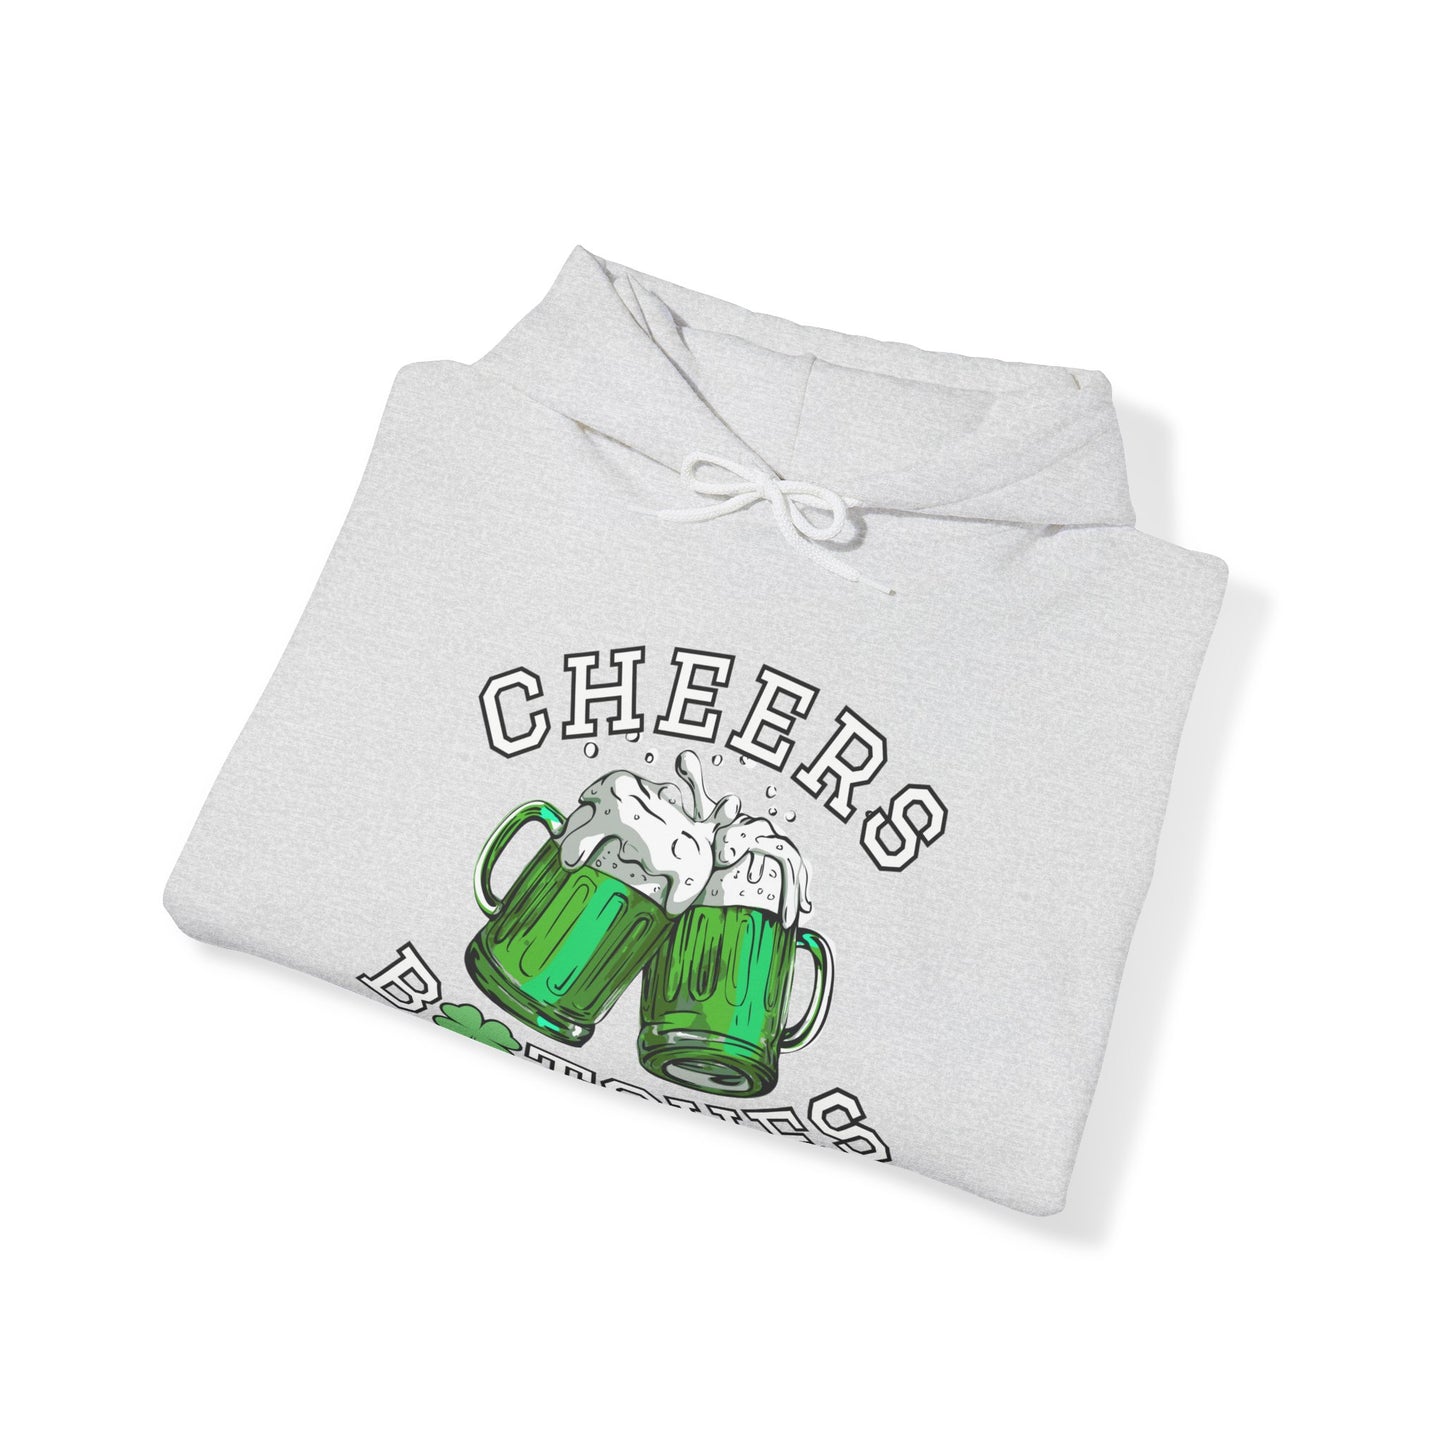 "Cheers B*tches" - HeavyBlend Unisex Hooded Sweatshirt - St. Patrick's Day Sweatshirt